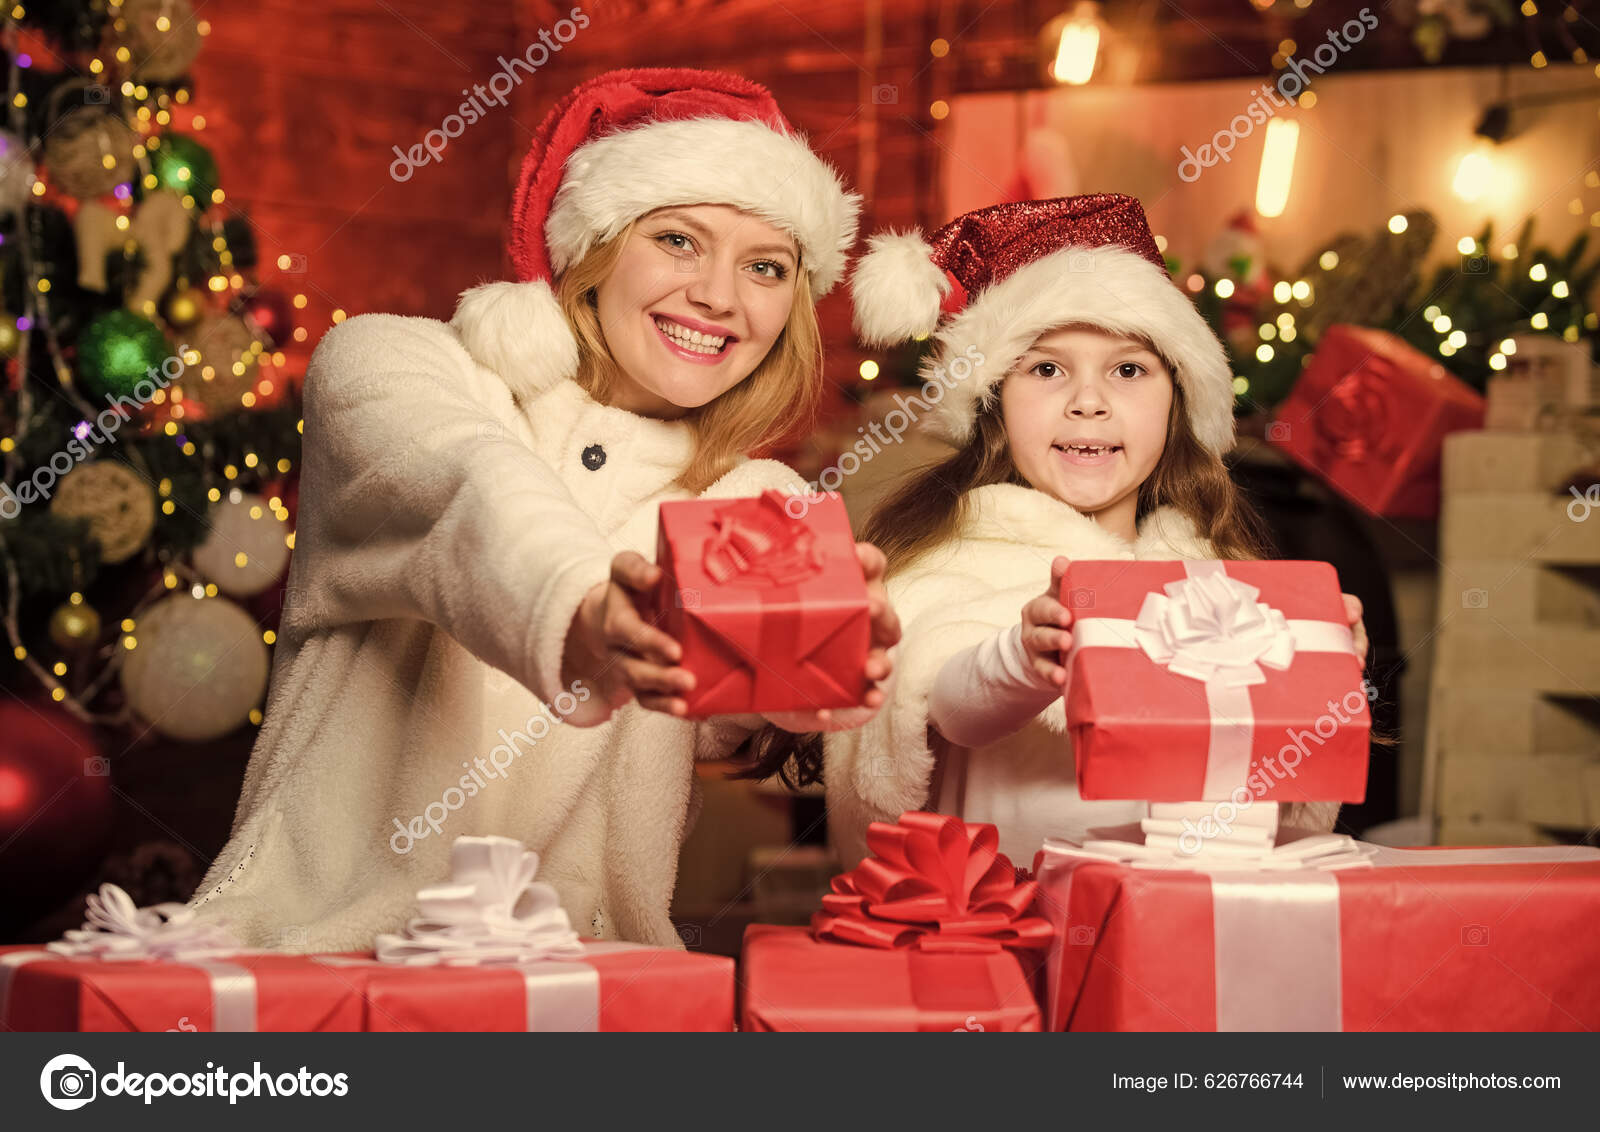 https://st5.depositphotos.com/2760050/62676/i/1600/depositphotos_626766744-stock-photo-gifts-girls-mom-child-gift.jpg